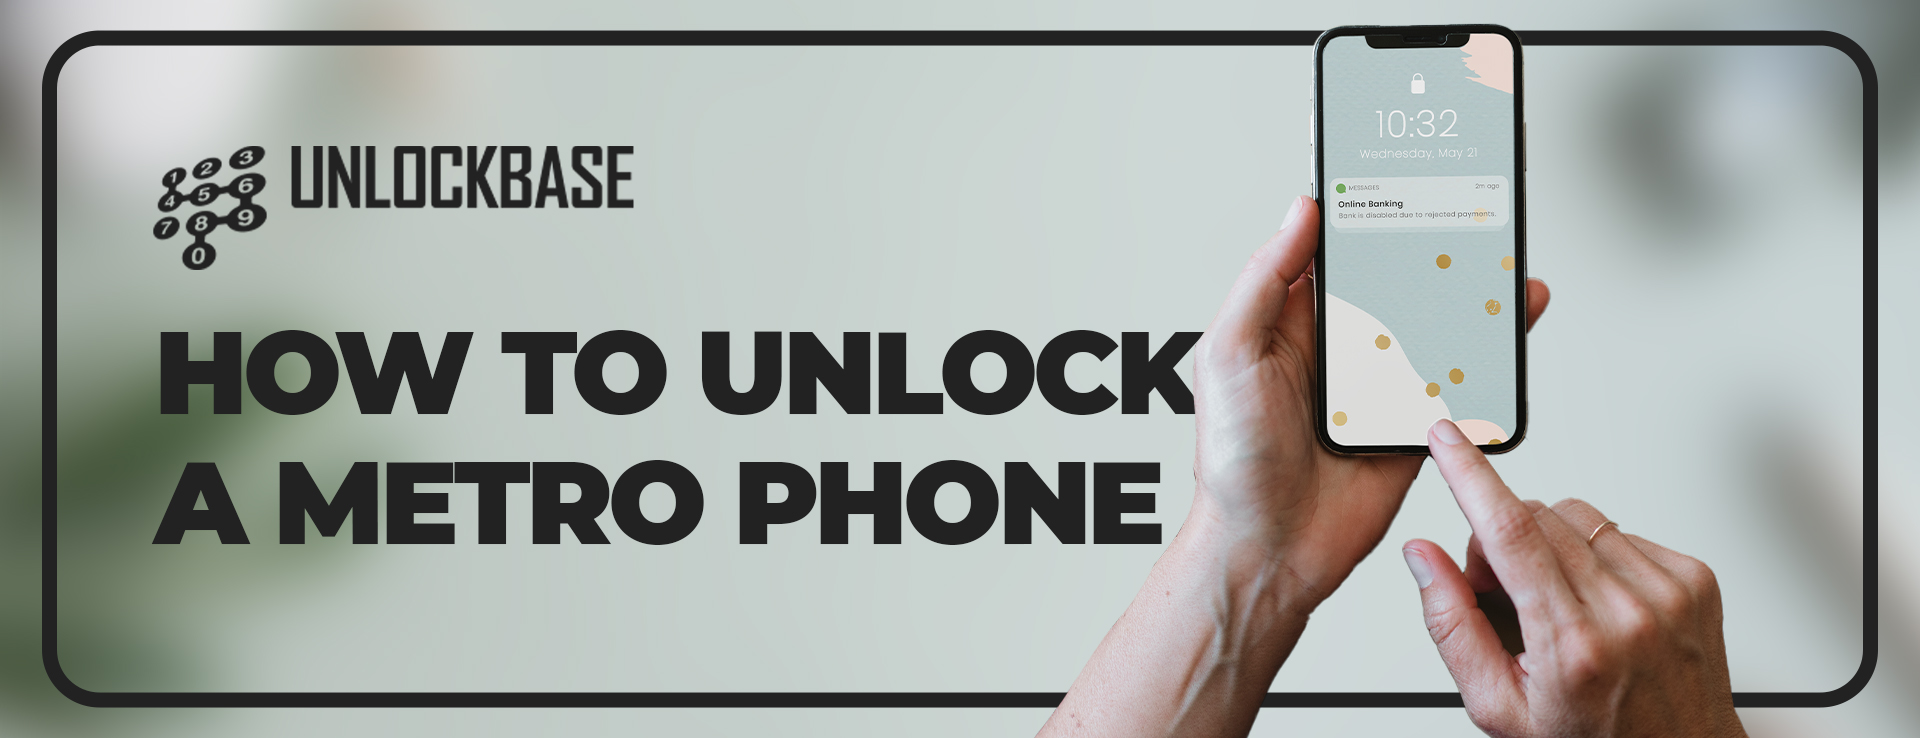 Remote Unlock Service Samsung S9 MetroPCS S9 Plus G960U G965U T-Mobile 